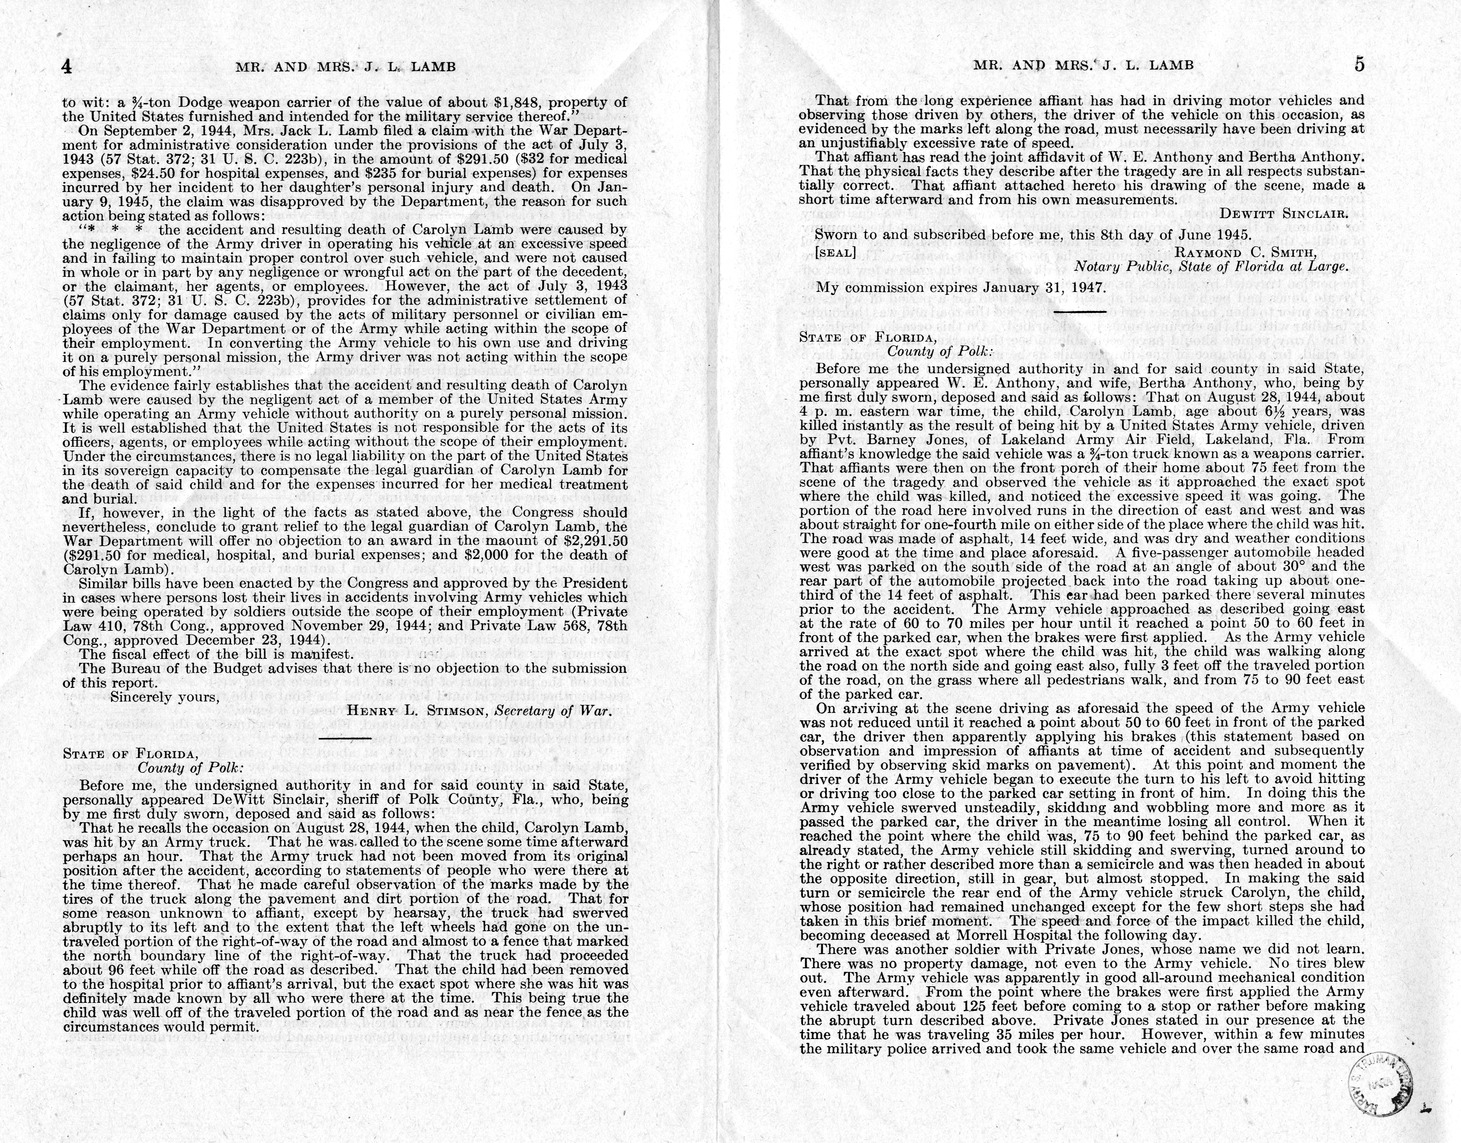 Memorandum from Frederick J. Bailey to M. C. Latta, H.R. 1796, For the Relief of Mr. and Mrs. J. L. Lamb, with Attachments